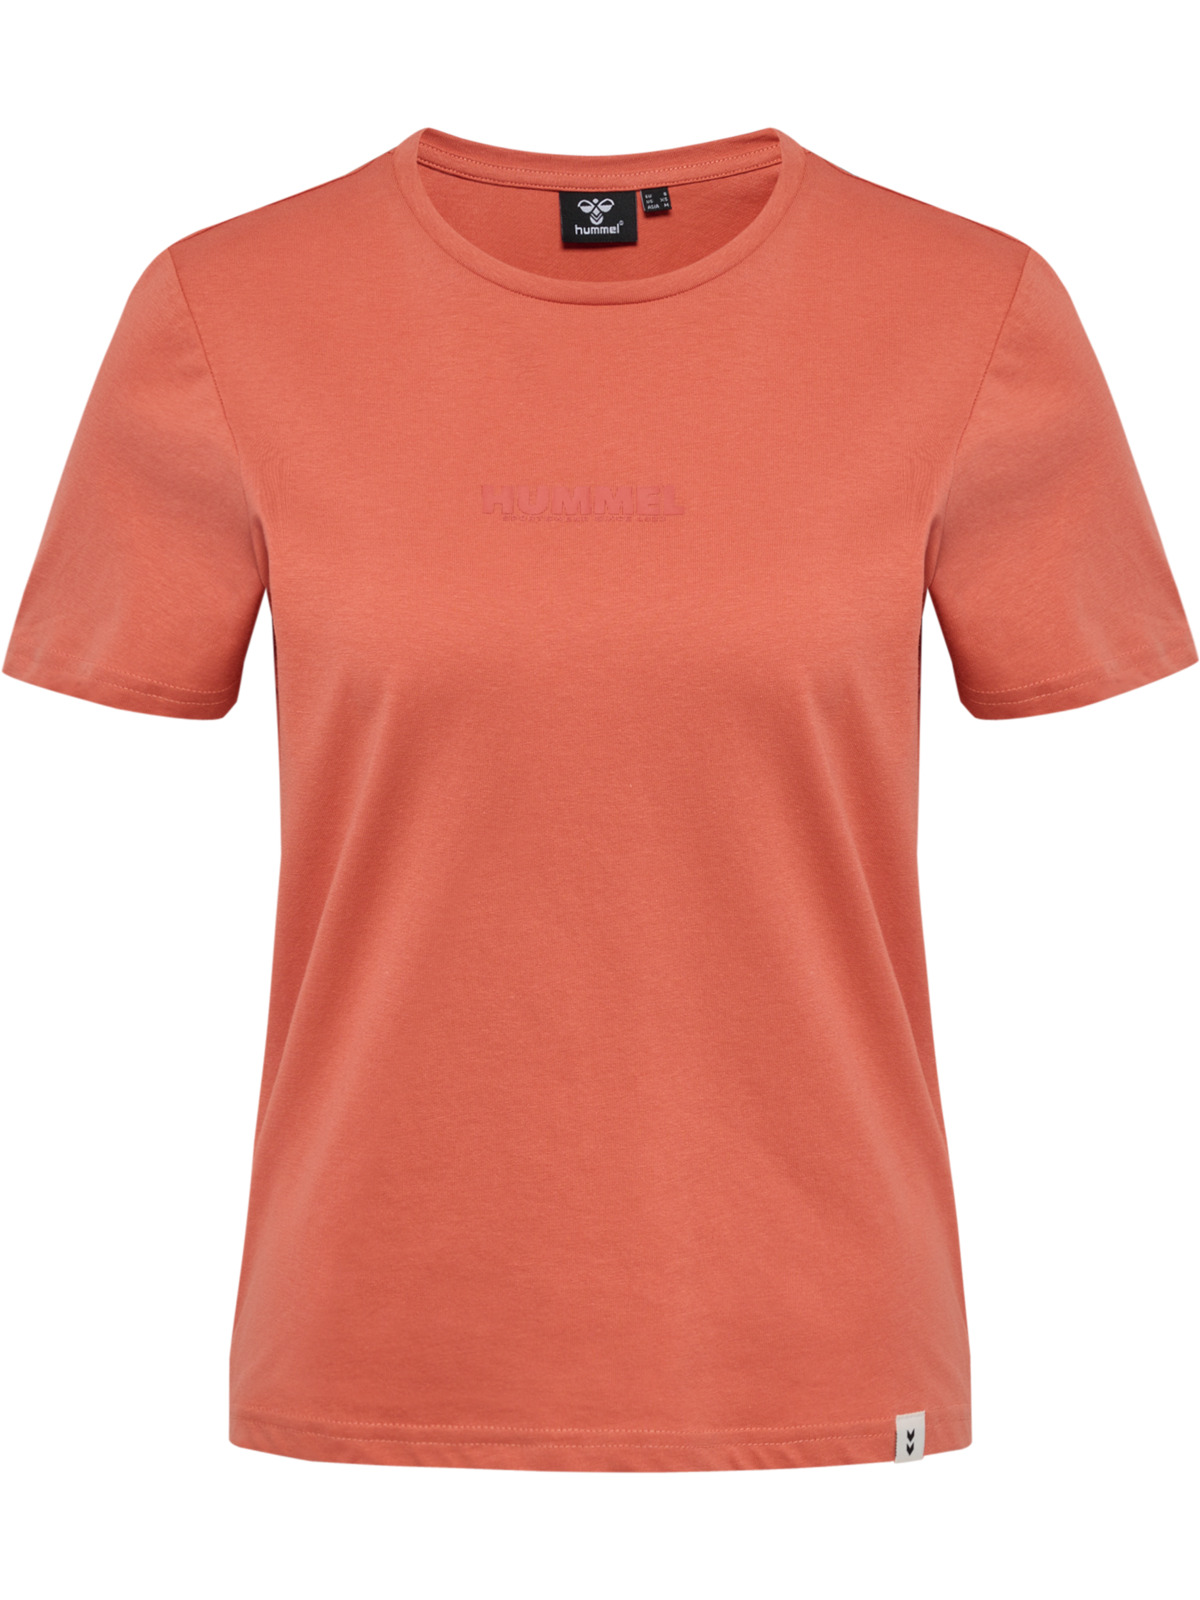 Hummel Hmllegacy Woman T-Shirt Apricot Brandy